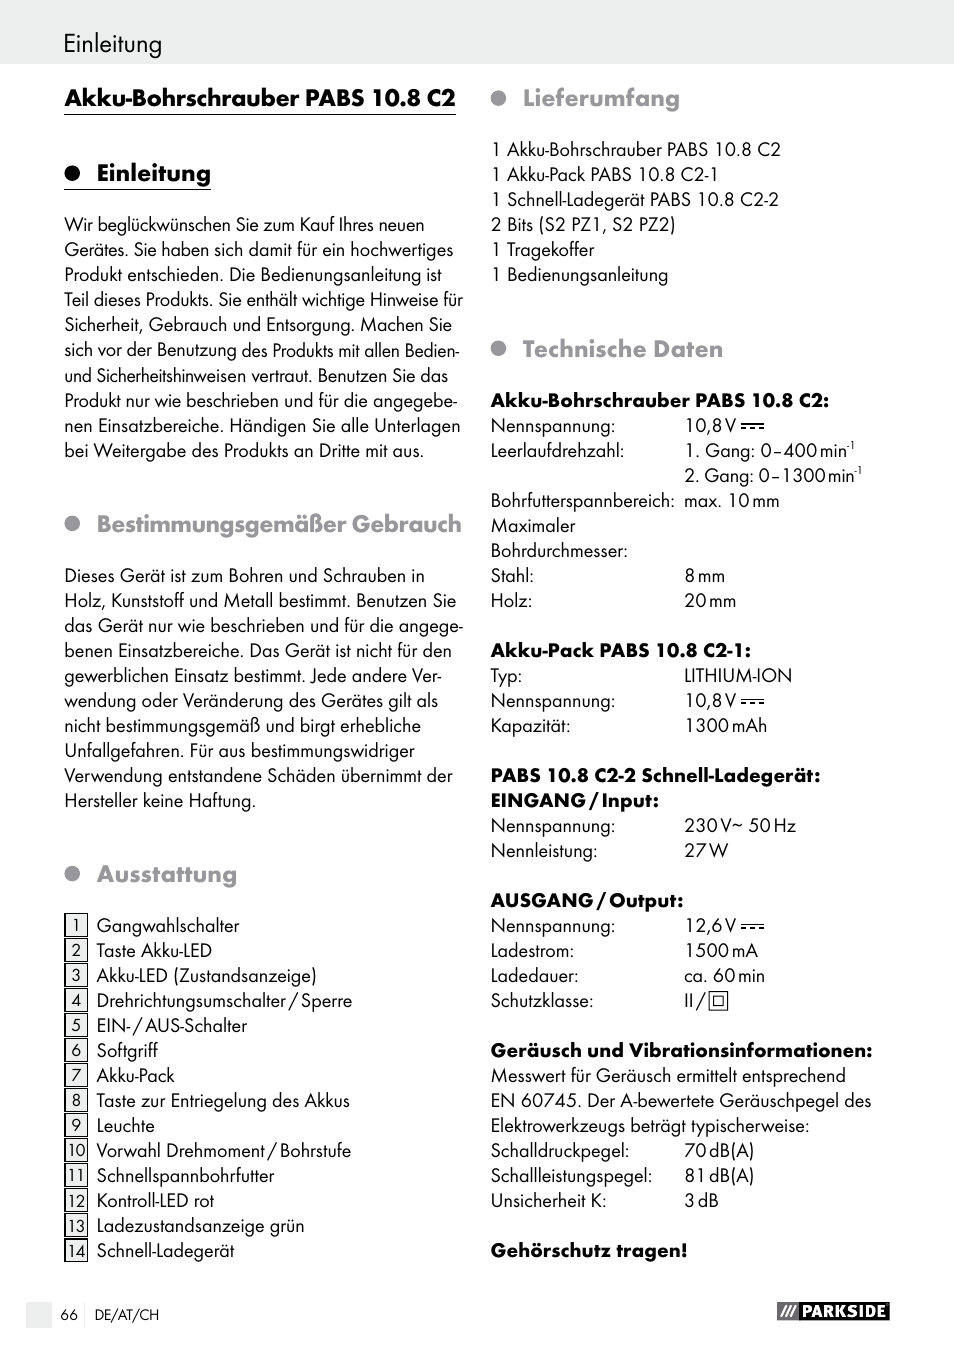 Einleitung, Akku-bohrschrauber pabs 10.8 c2, Bestimmungsgemäßer gebrauch |  Parkside PABS 10.8 C2 User Manual | Page 66 / 75 | Original mode